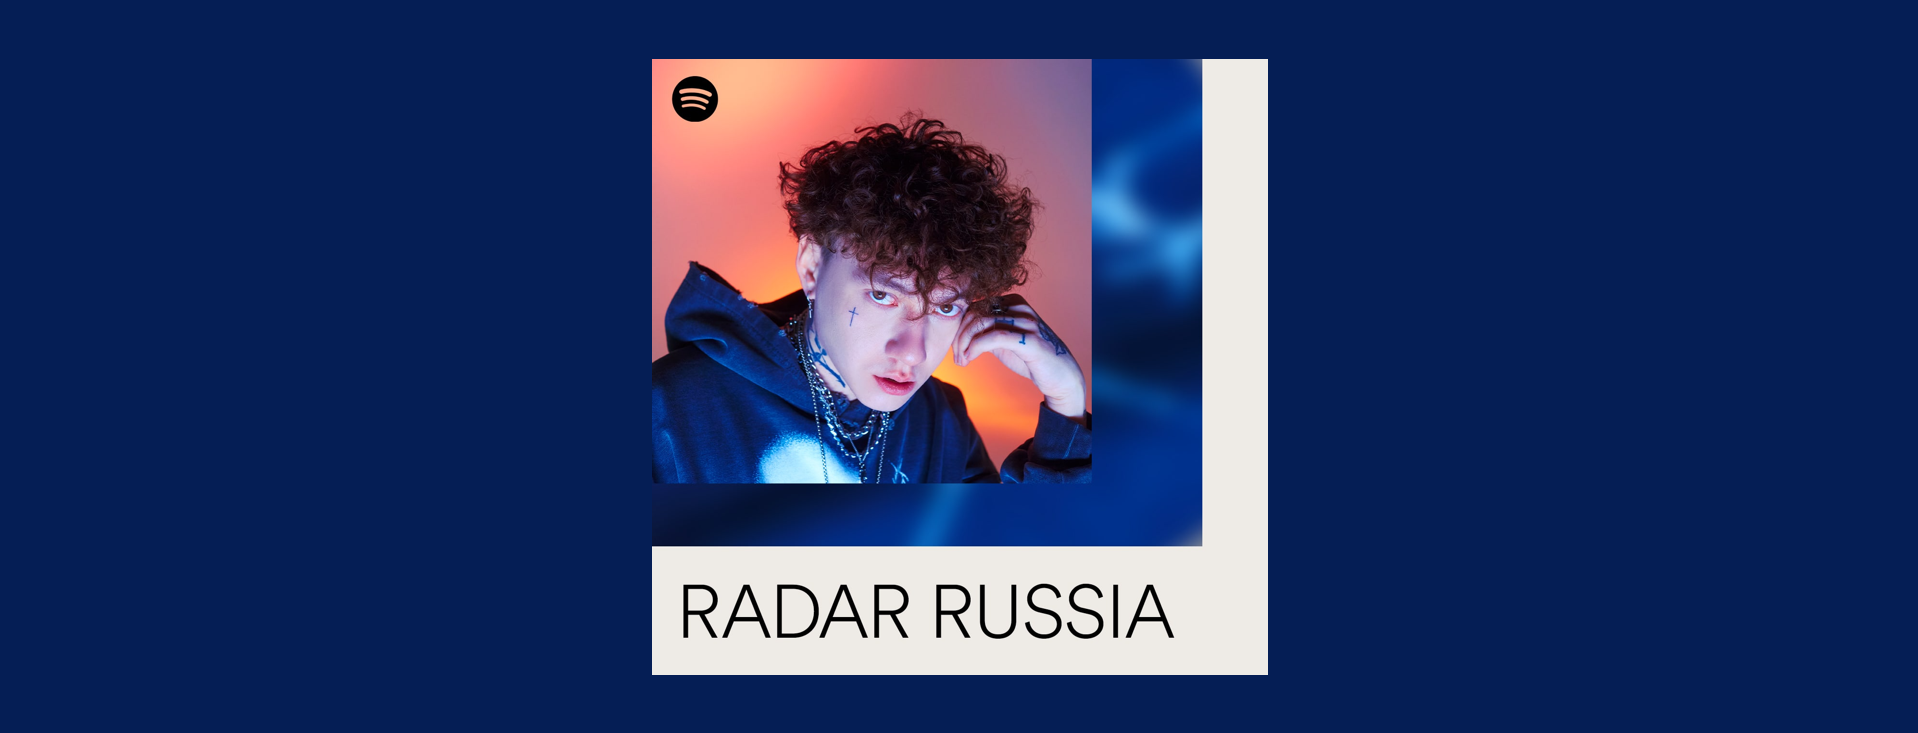 Spotify retoma o programa Radar Brasil que impulsiona artistas